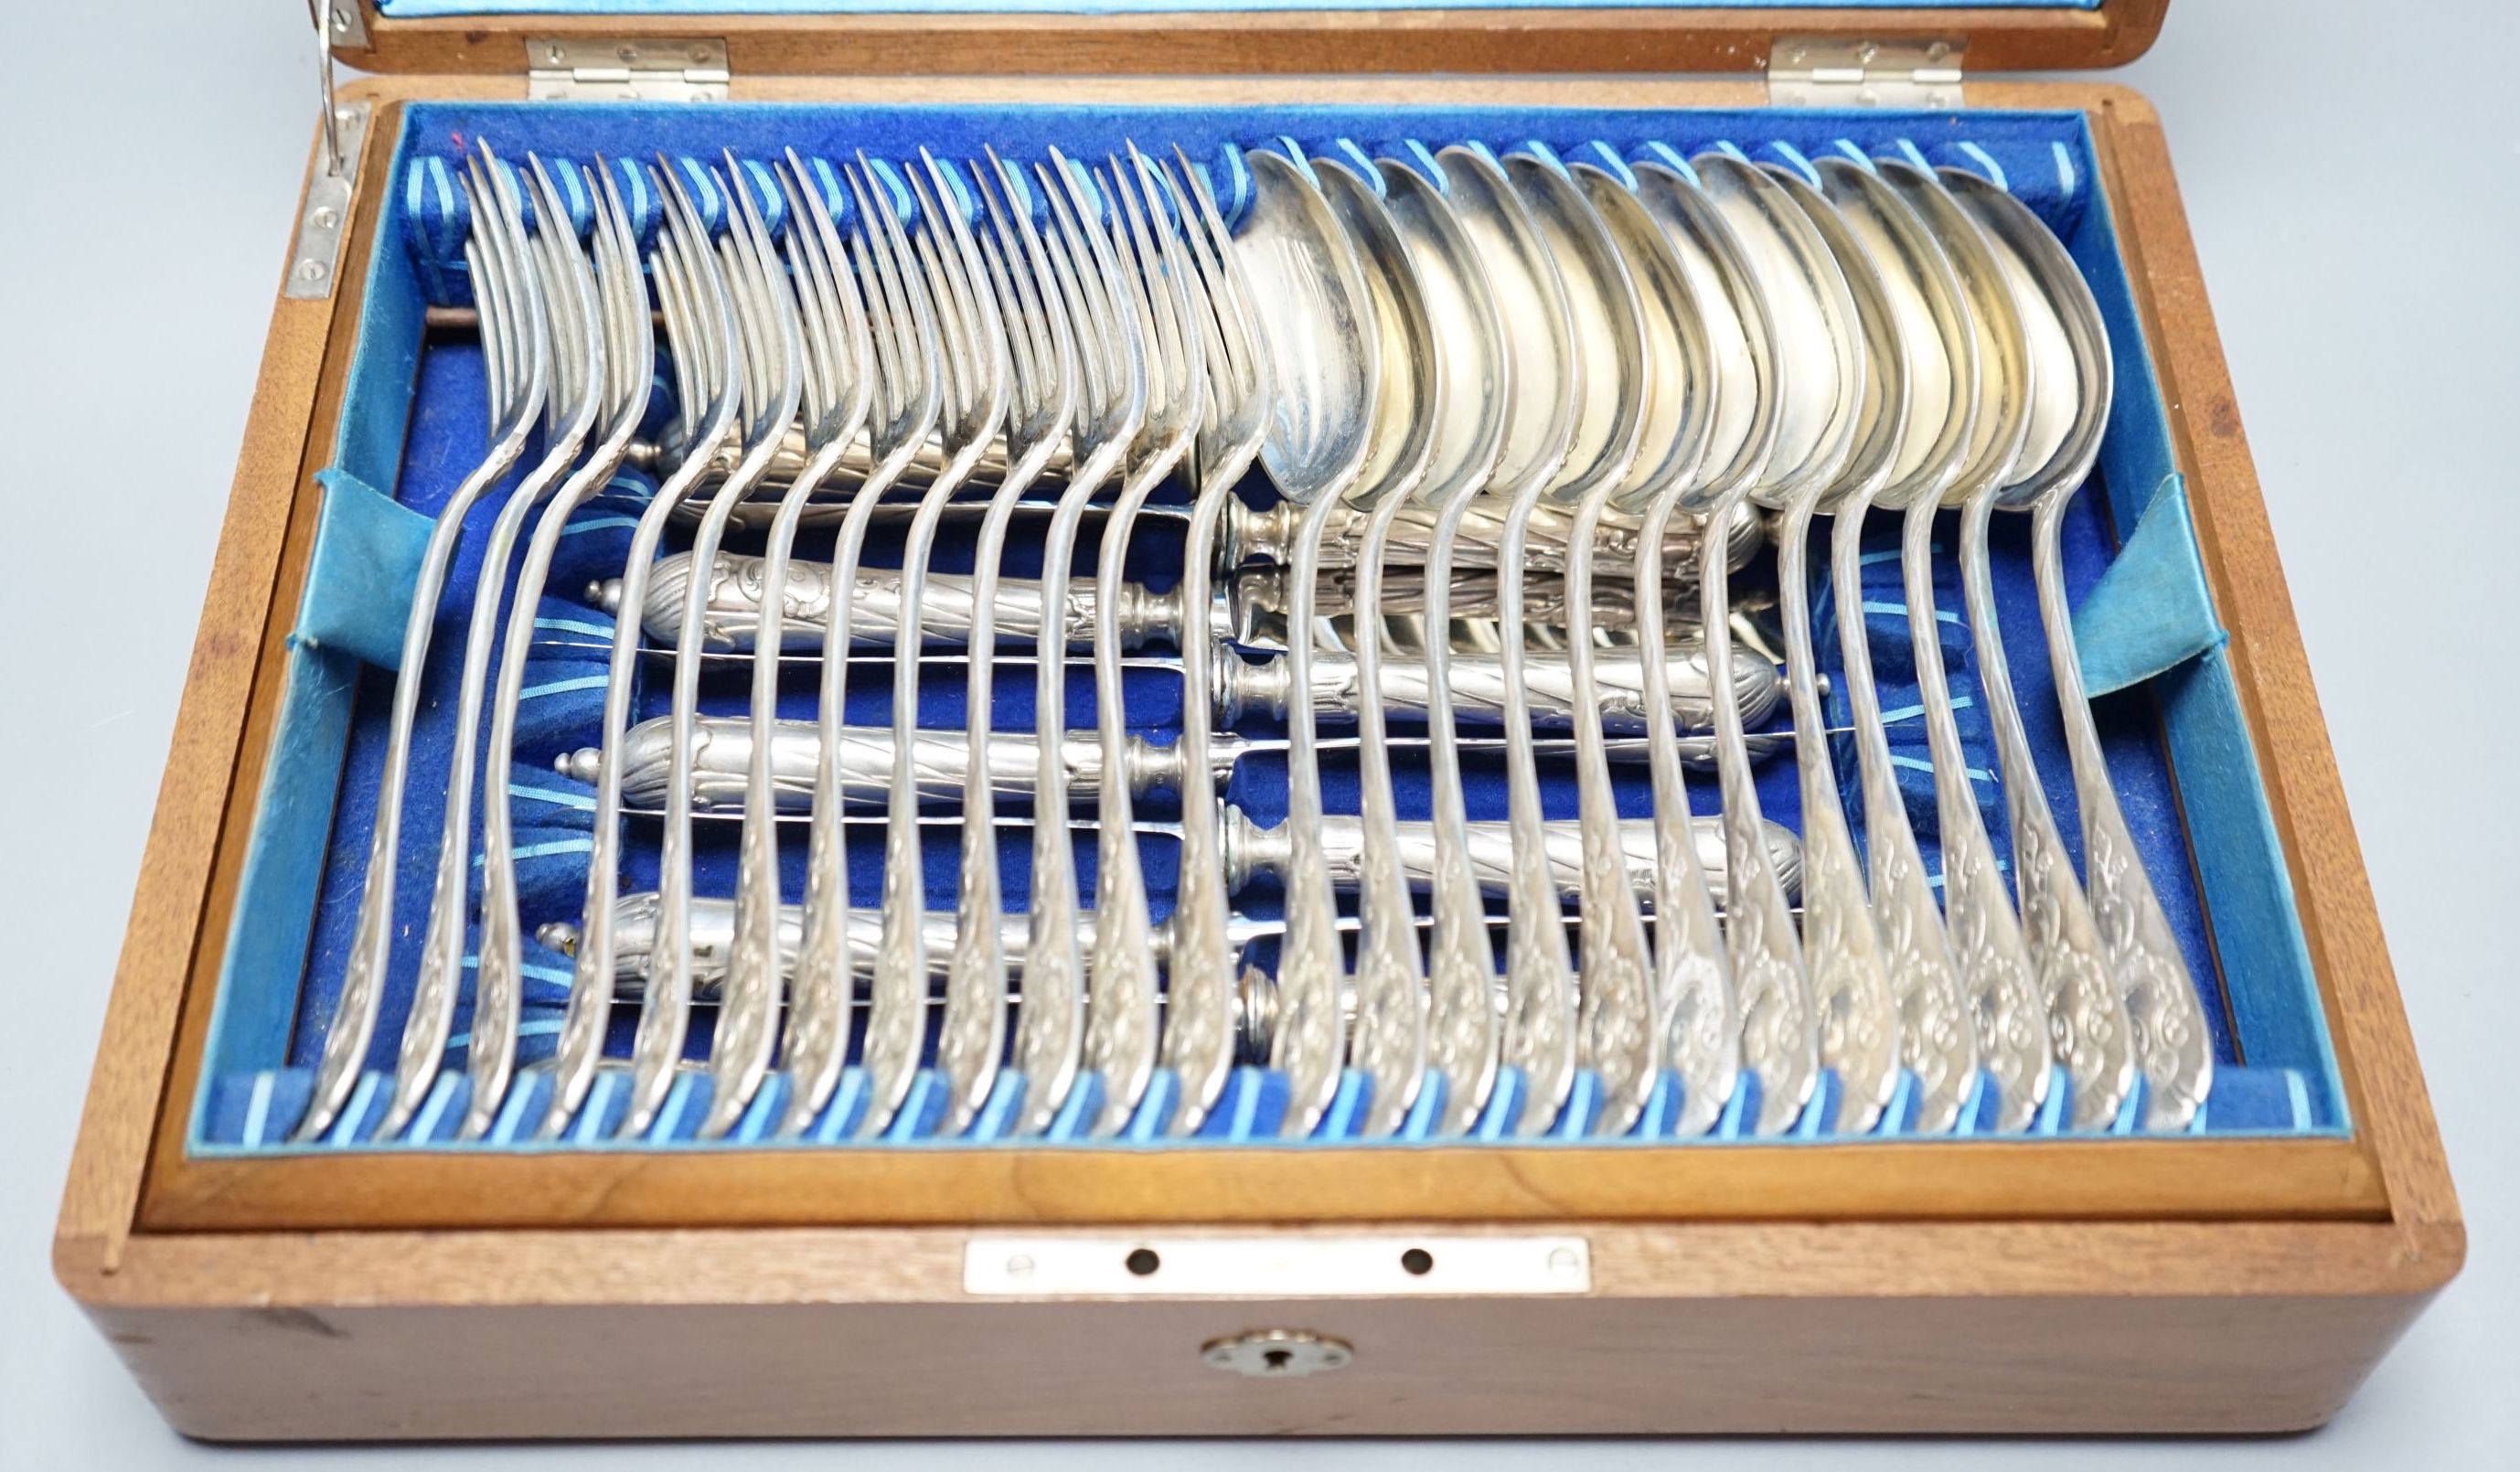 A canteen of German 800 standard cutlery, by Krischner, comprising twelve table forks, twelve table spoons and twelve 800 handles steel table knives